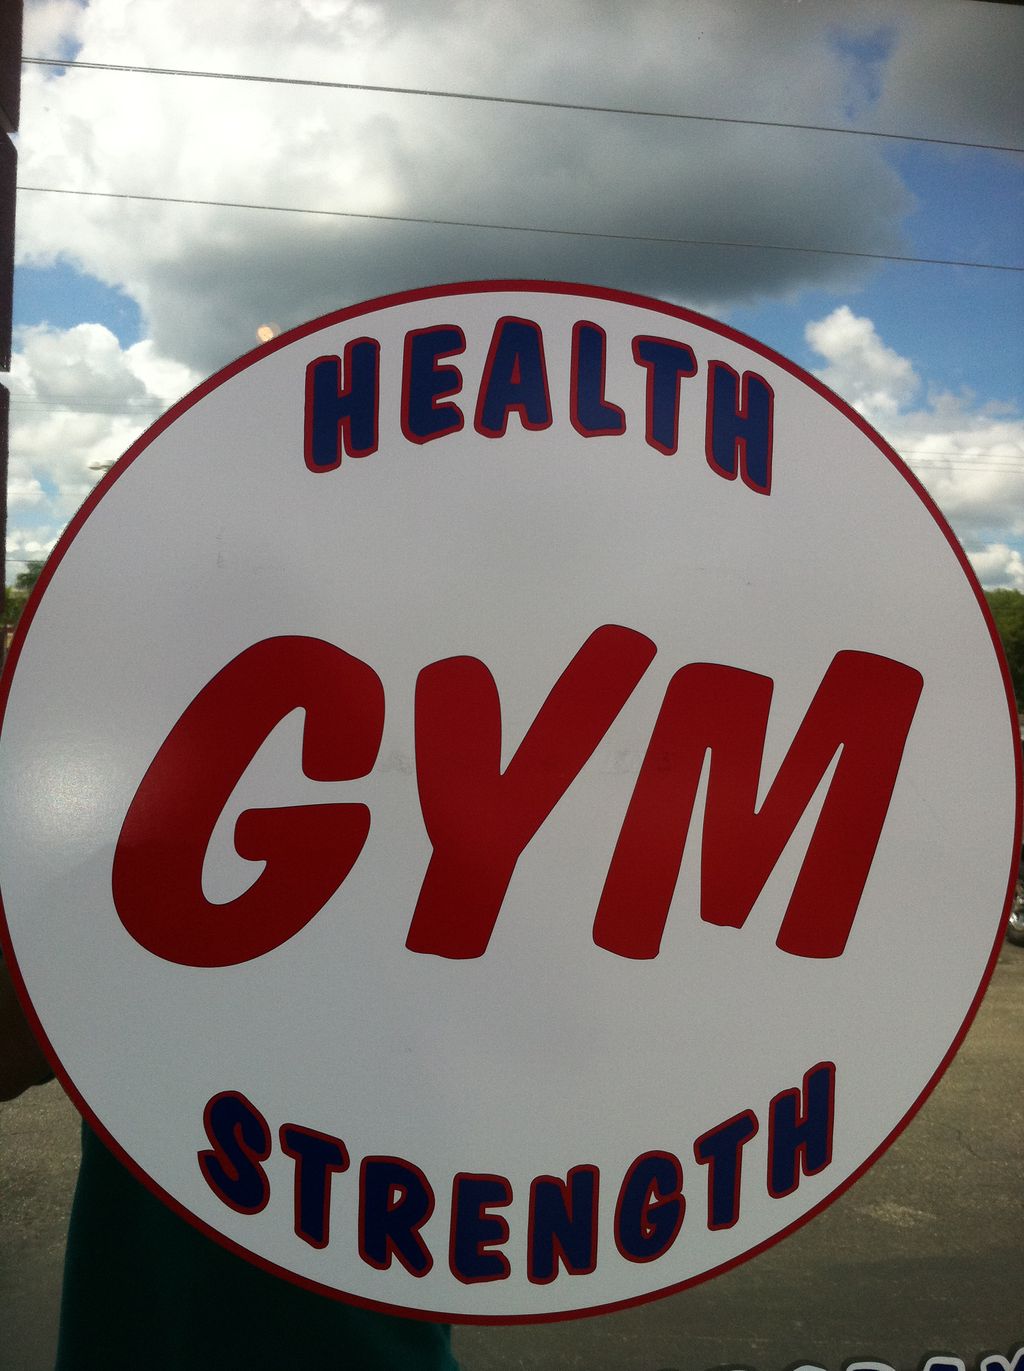 Health & Strength Gym